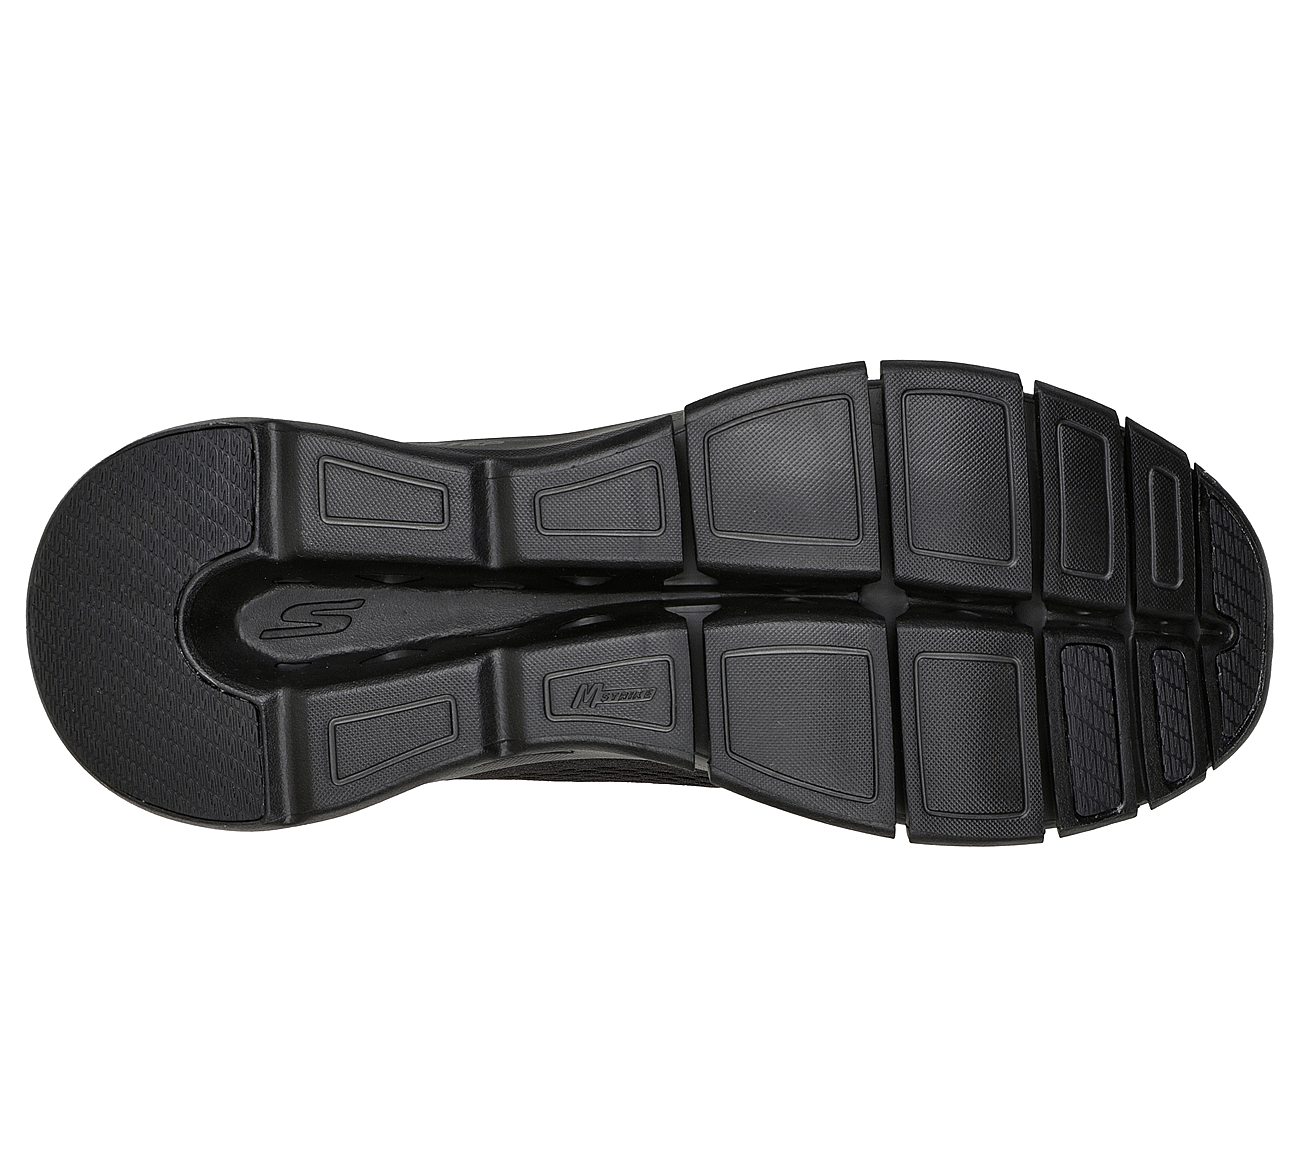 GO RUN GLIDE-STEP FLEX, BBLACK Footwear Bottom View